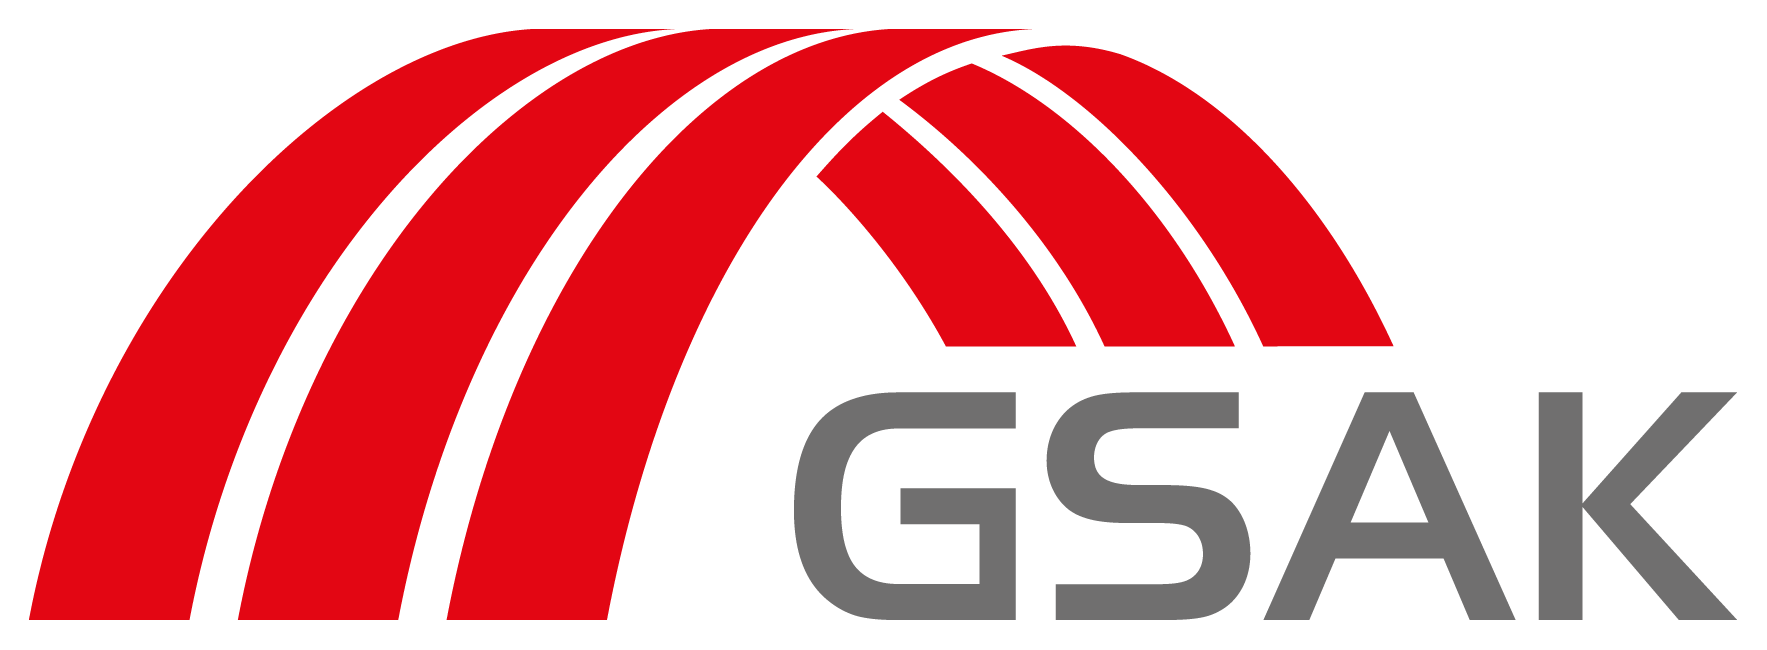 GSAK Logo farbig